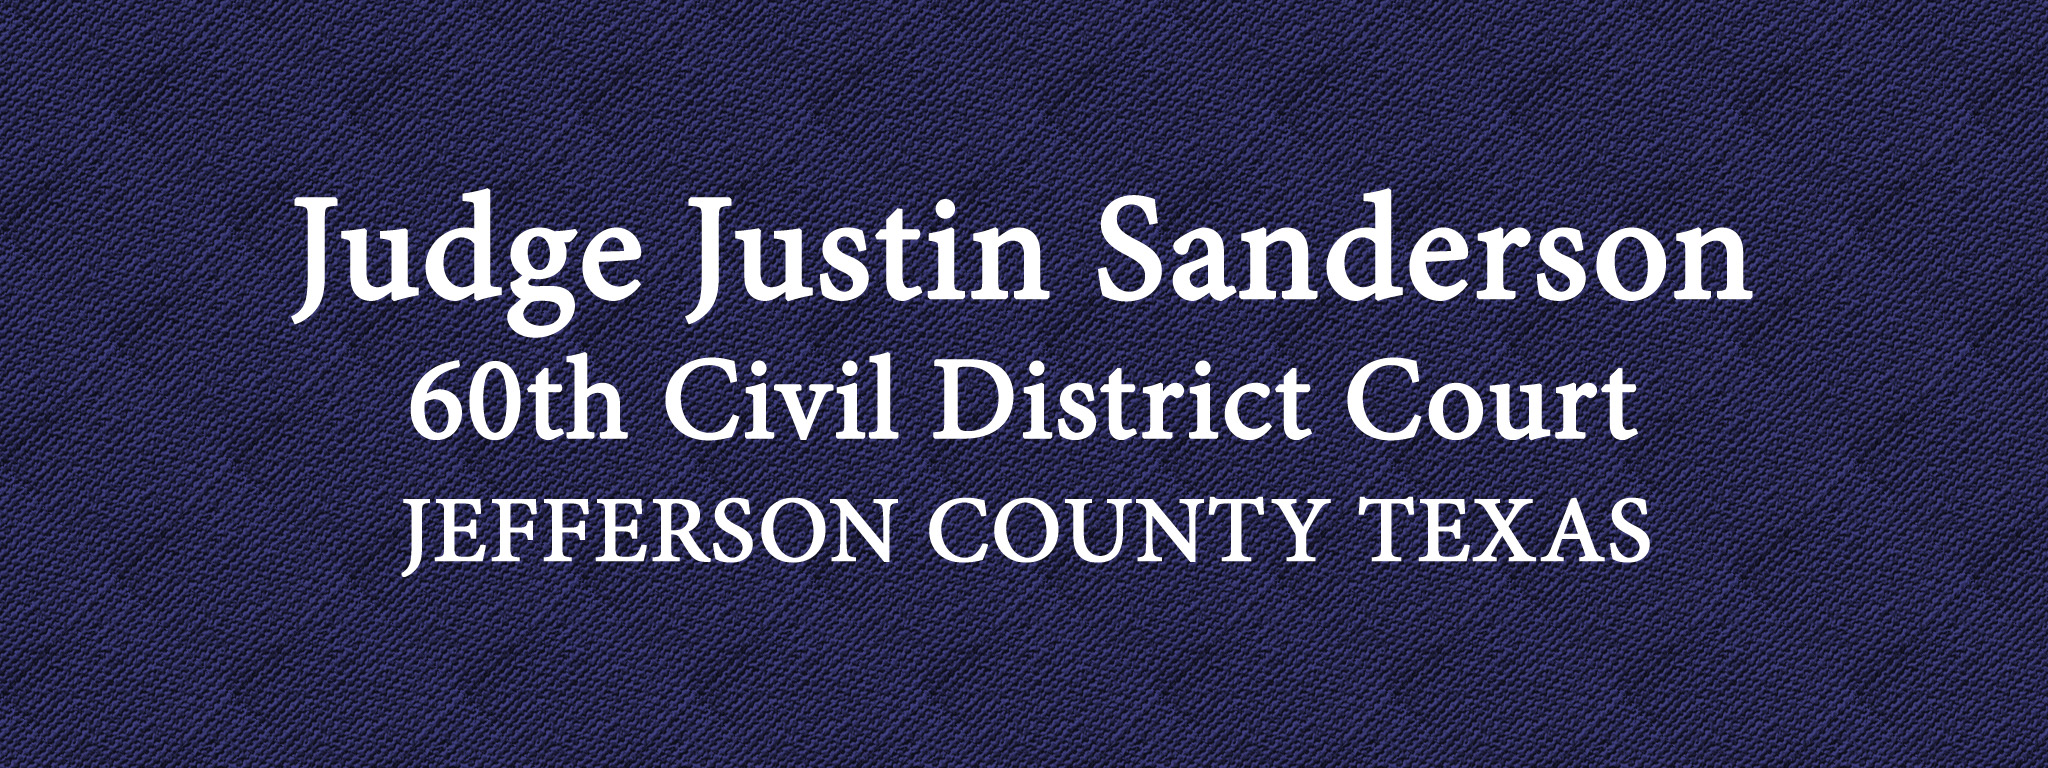 Judge Justin Sanderson